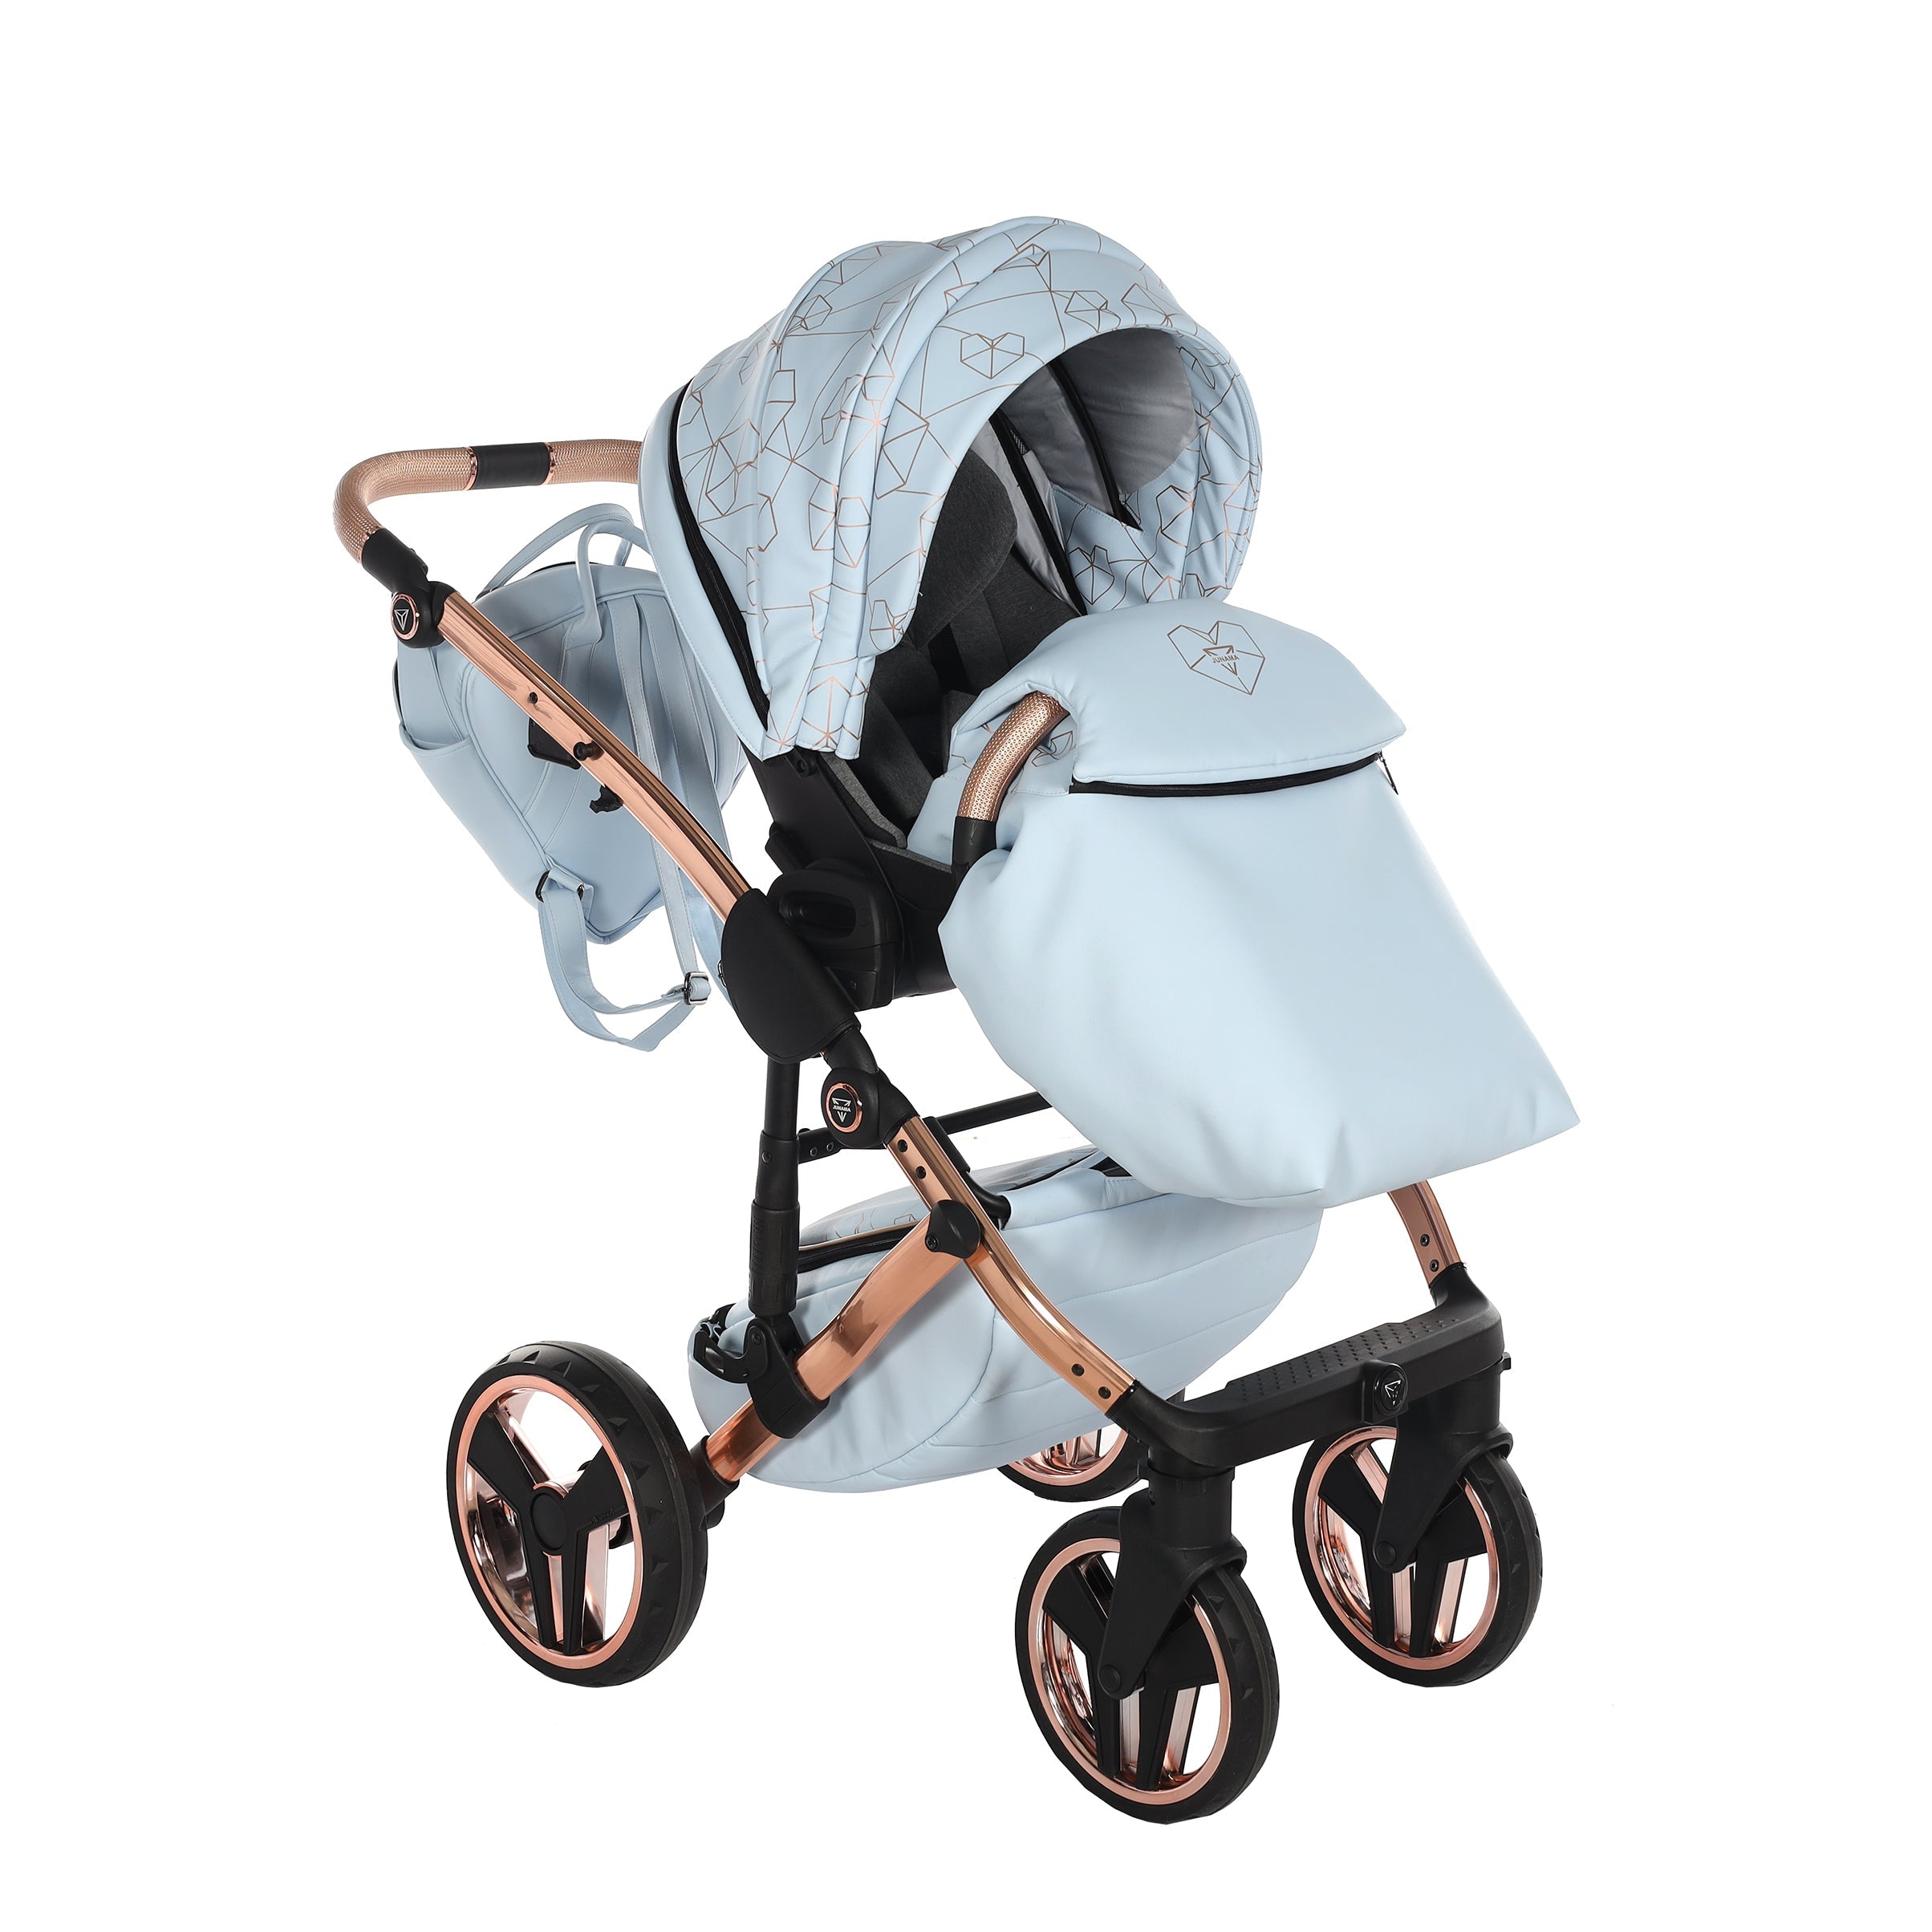 Junama Heart, baby prams or stroller 2 in 1 - Blue and Copper, Code number: JUNHERT05